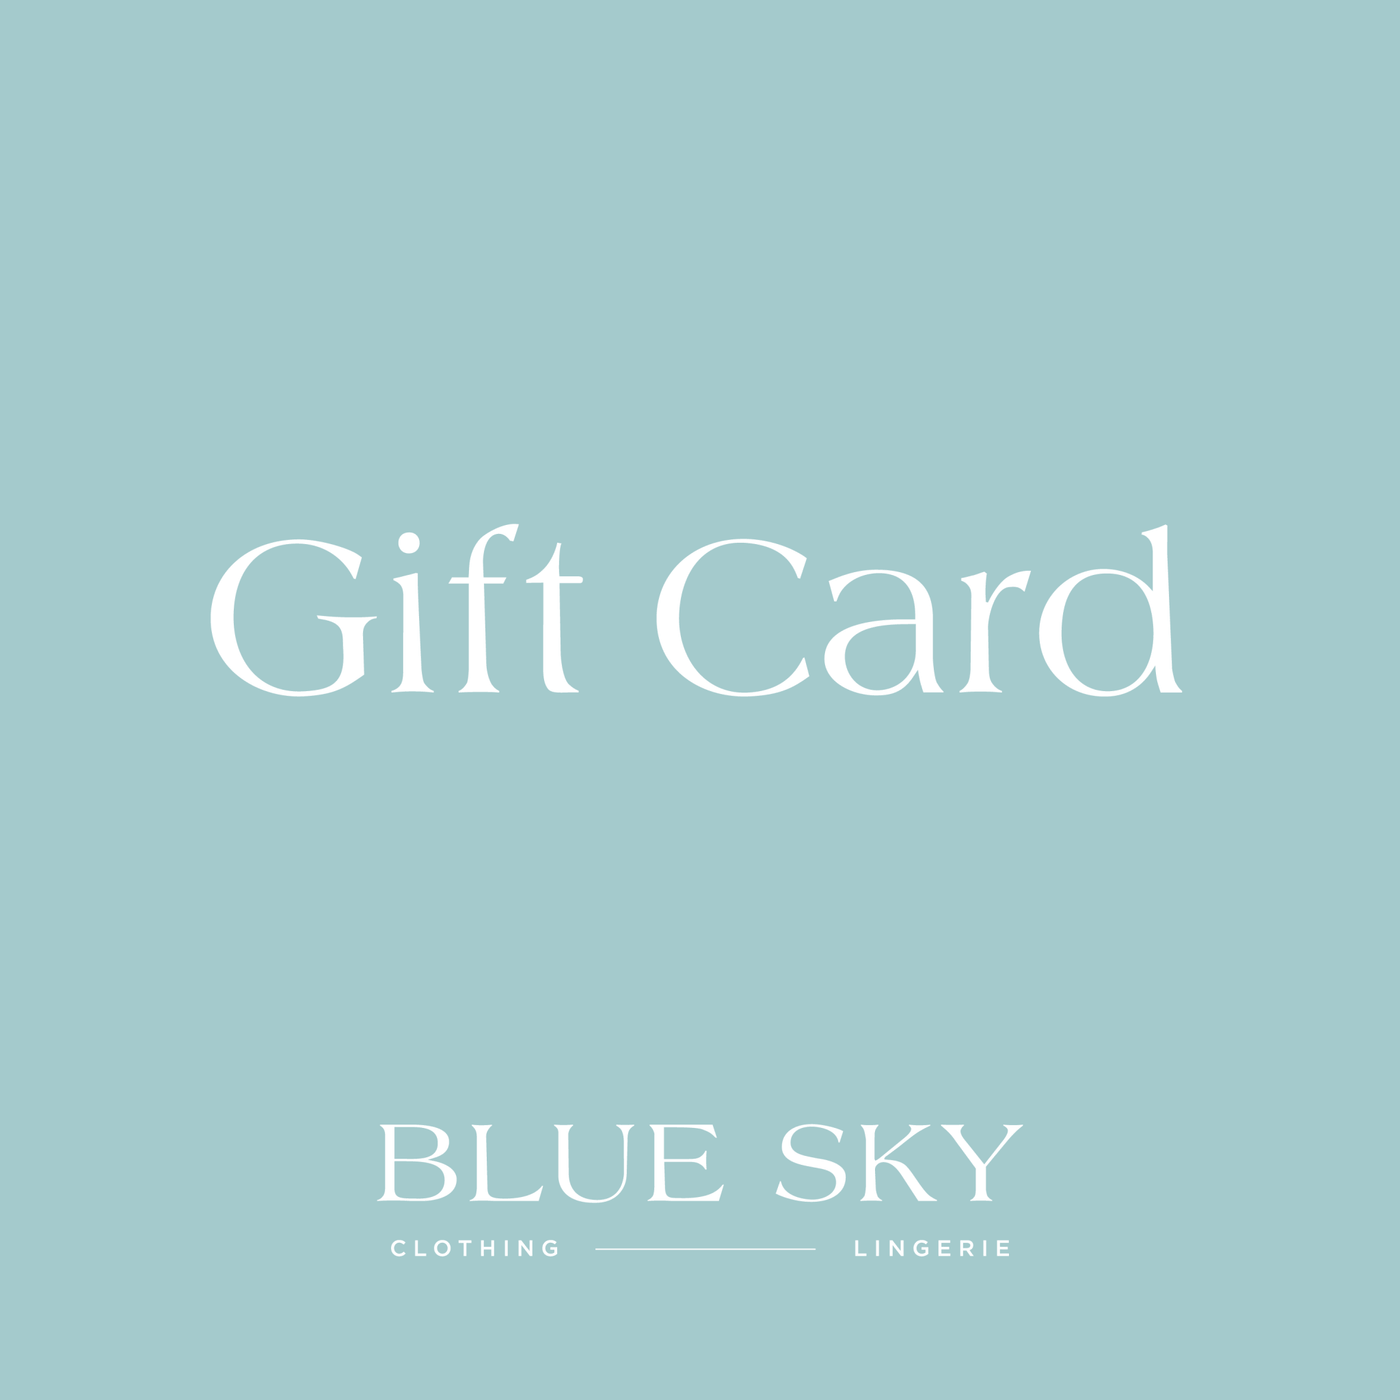 Blue Sky Clothing & Lingerie Gift Card - Blue Sky Clothing & Lingerie